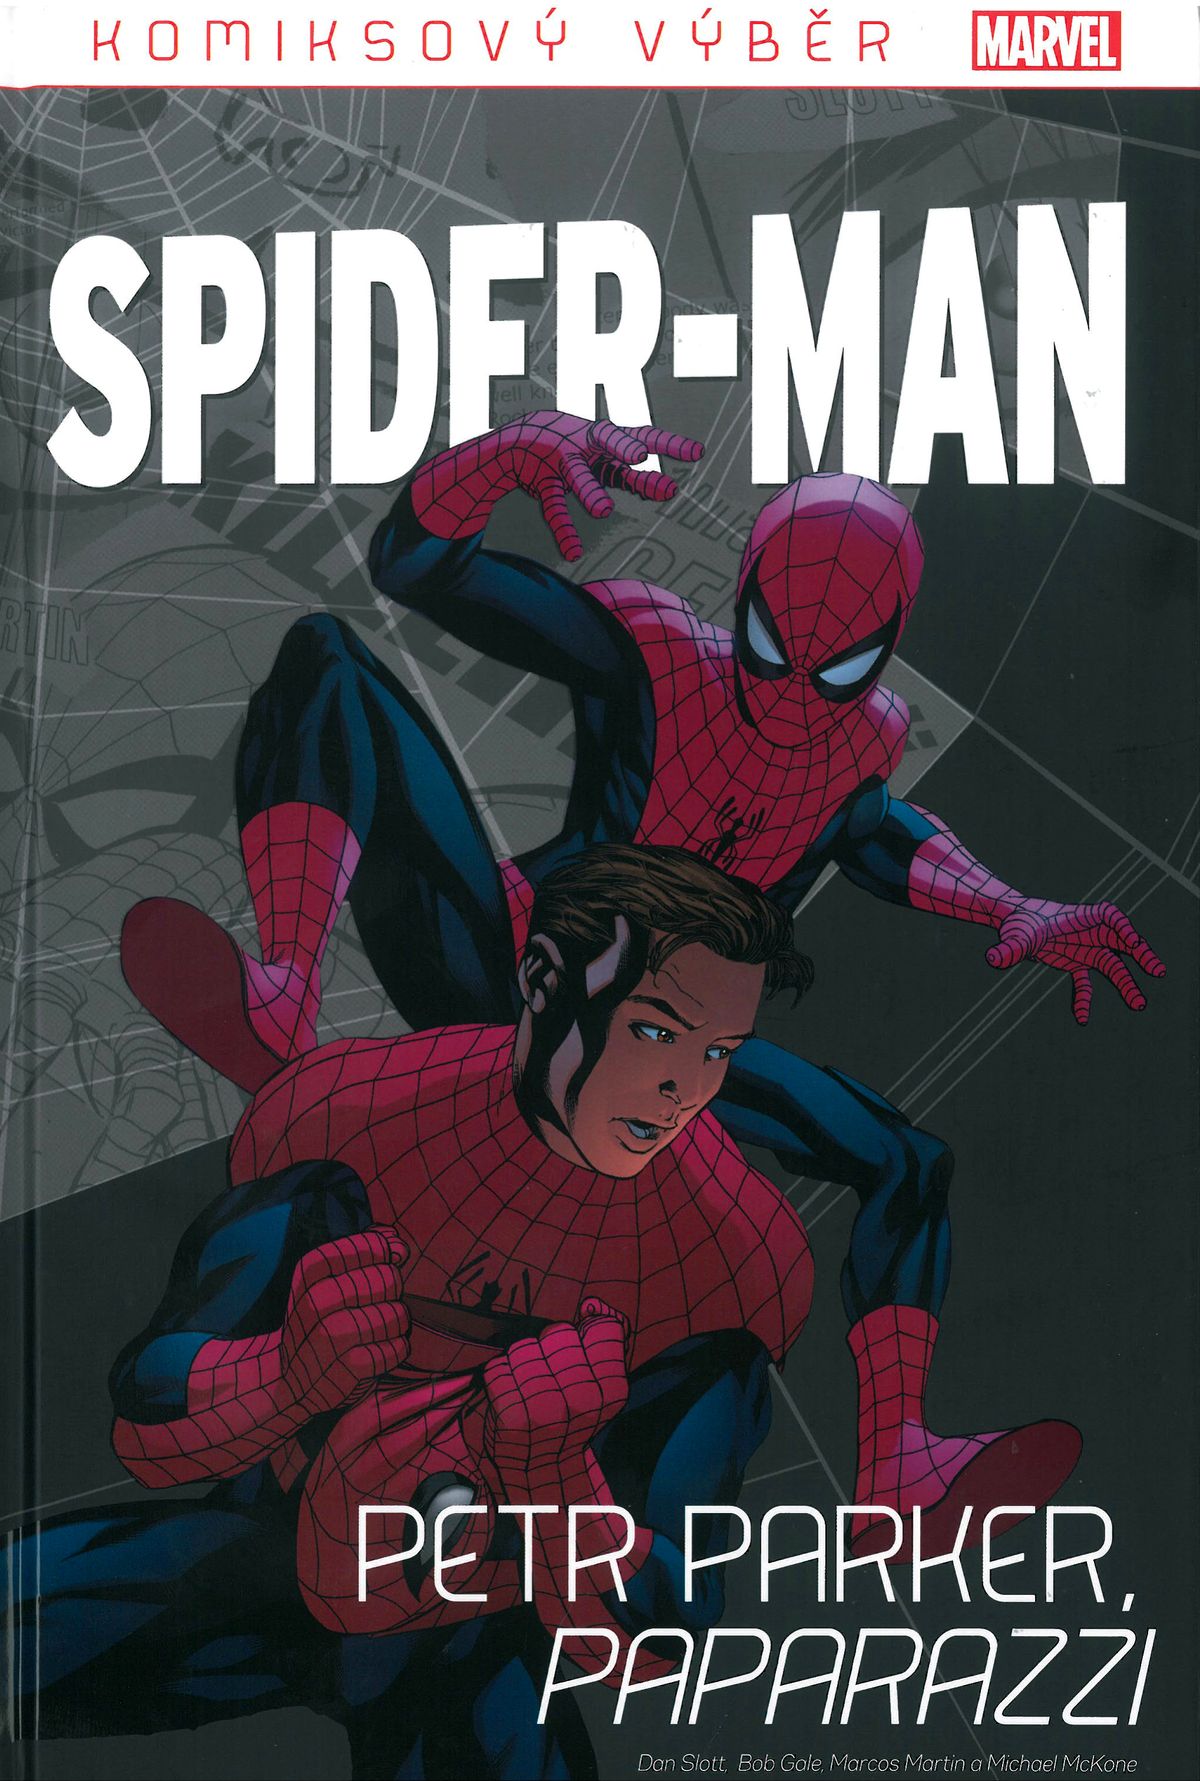 KV Spider-Man 033: Petr Parker, Paparazzi